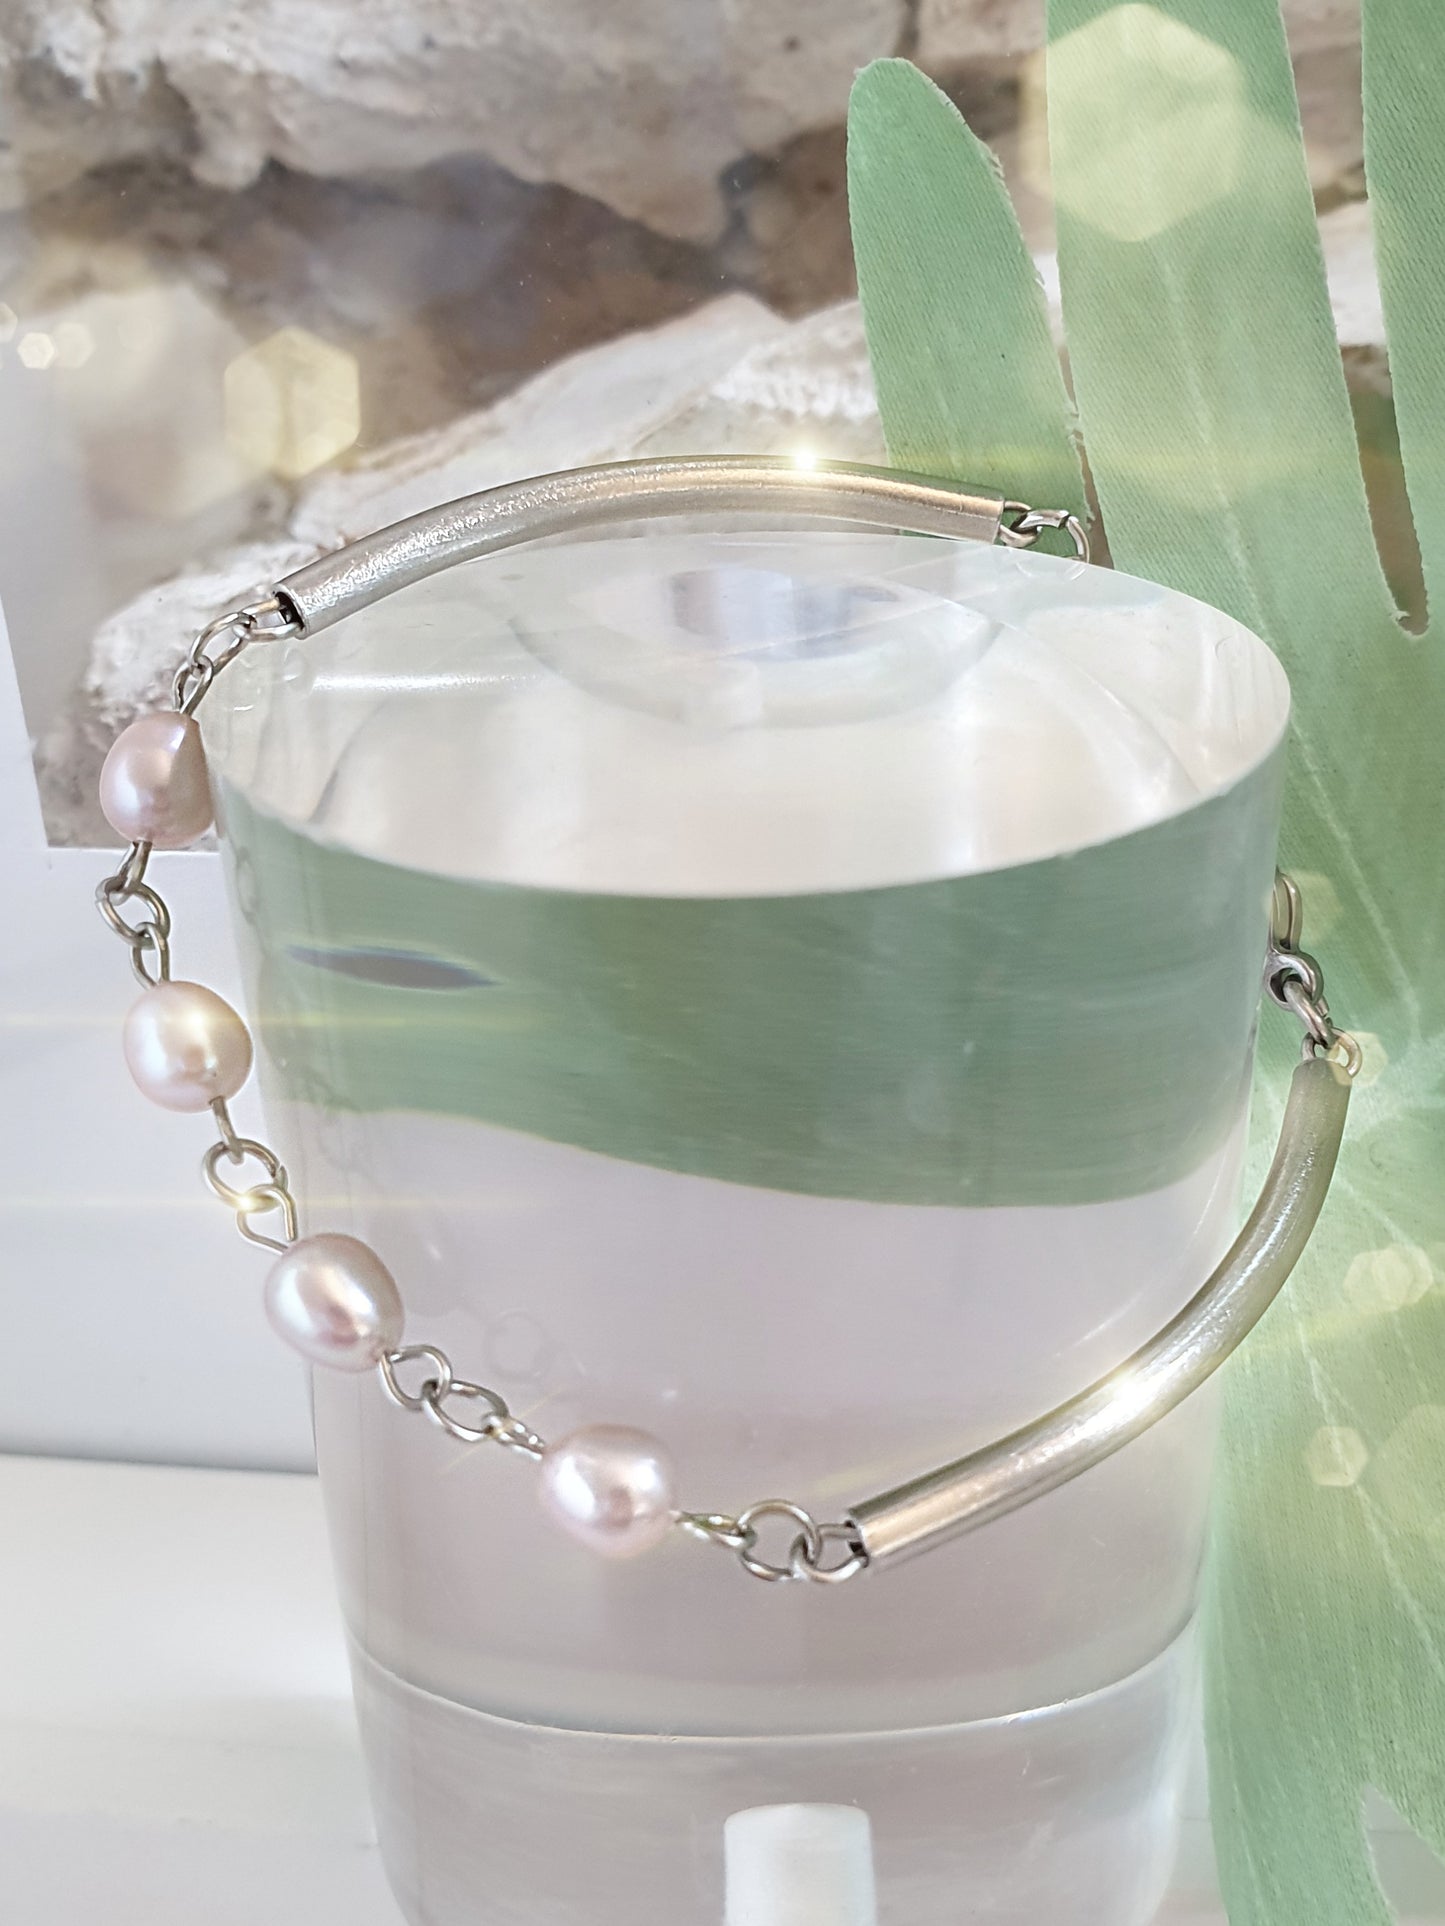 Perlenarmband mit modernen Edelstahlelementen um ja rosa Süßwasserperlen